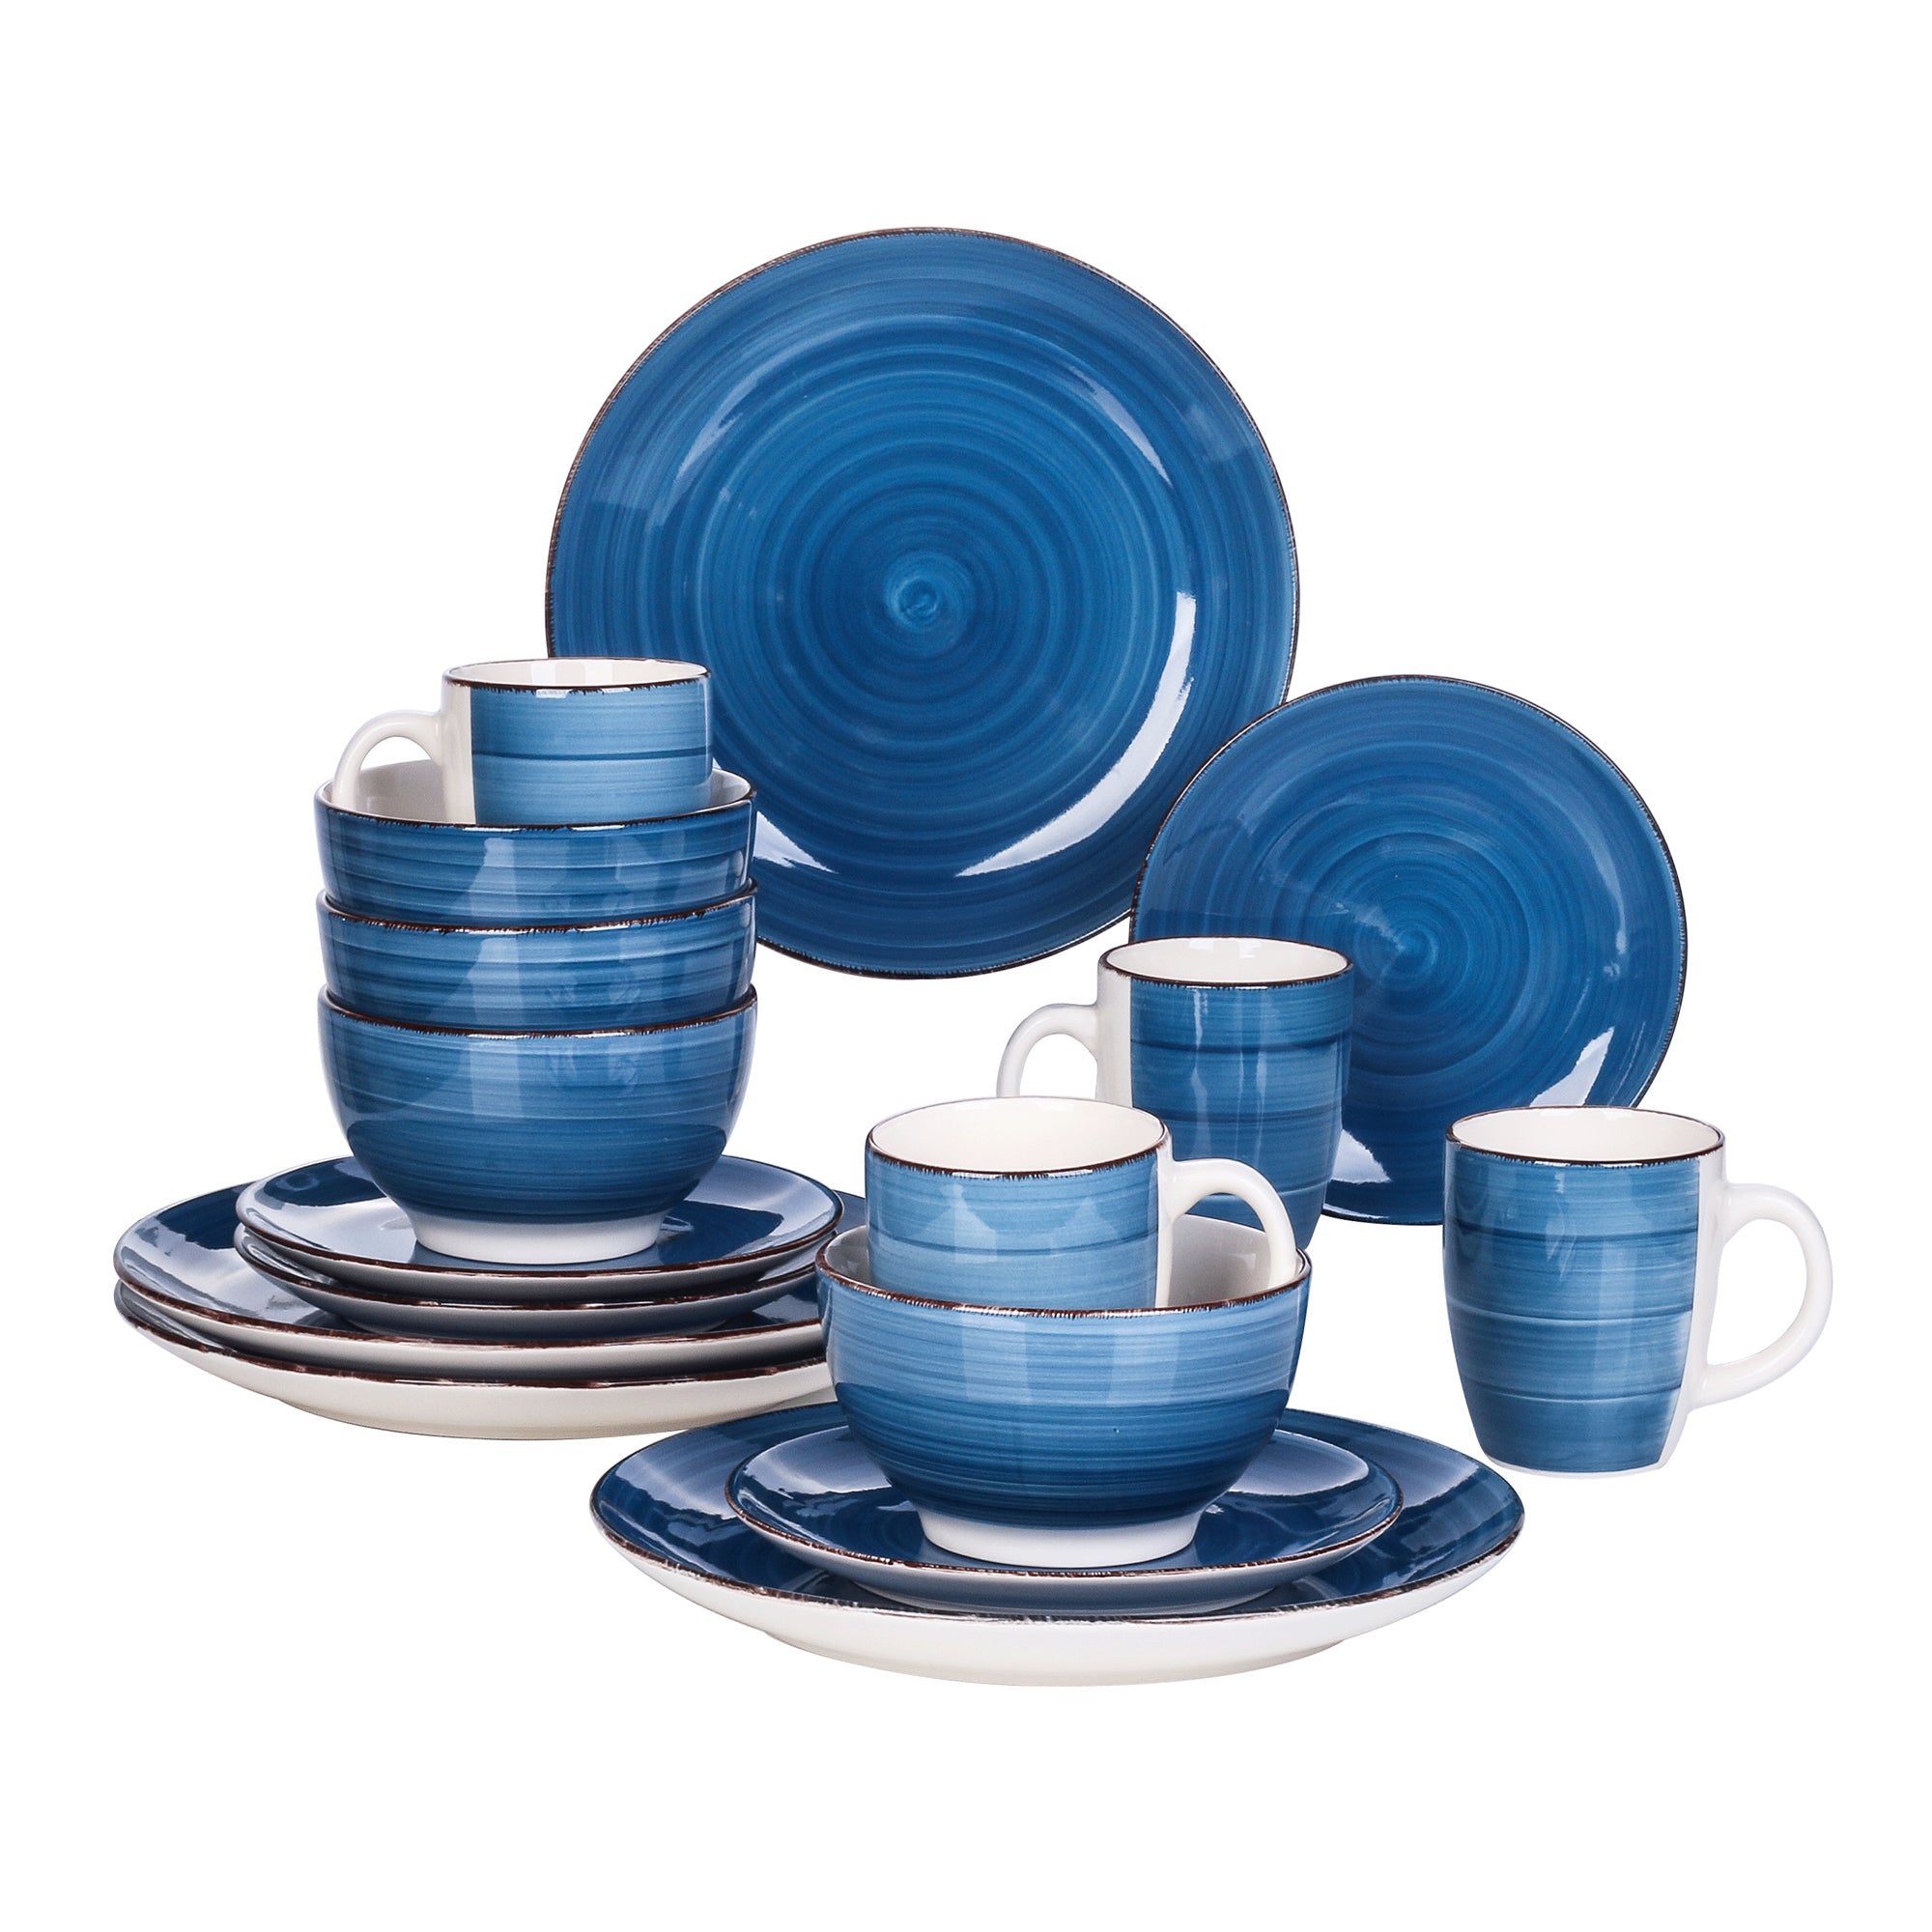 vancasso, Series Bella, Stoneware Dinnerware Set, Blue Dinner Set